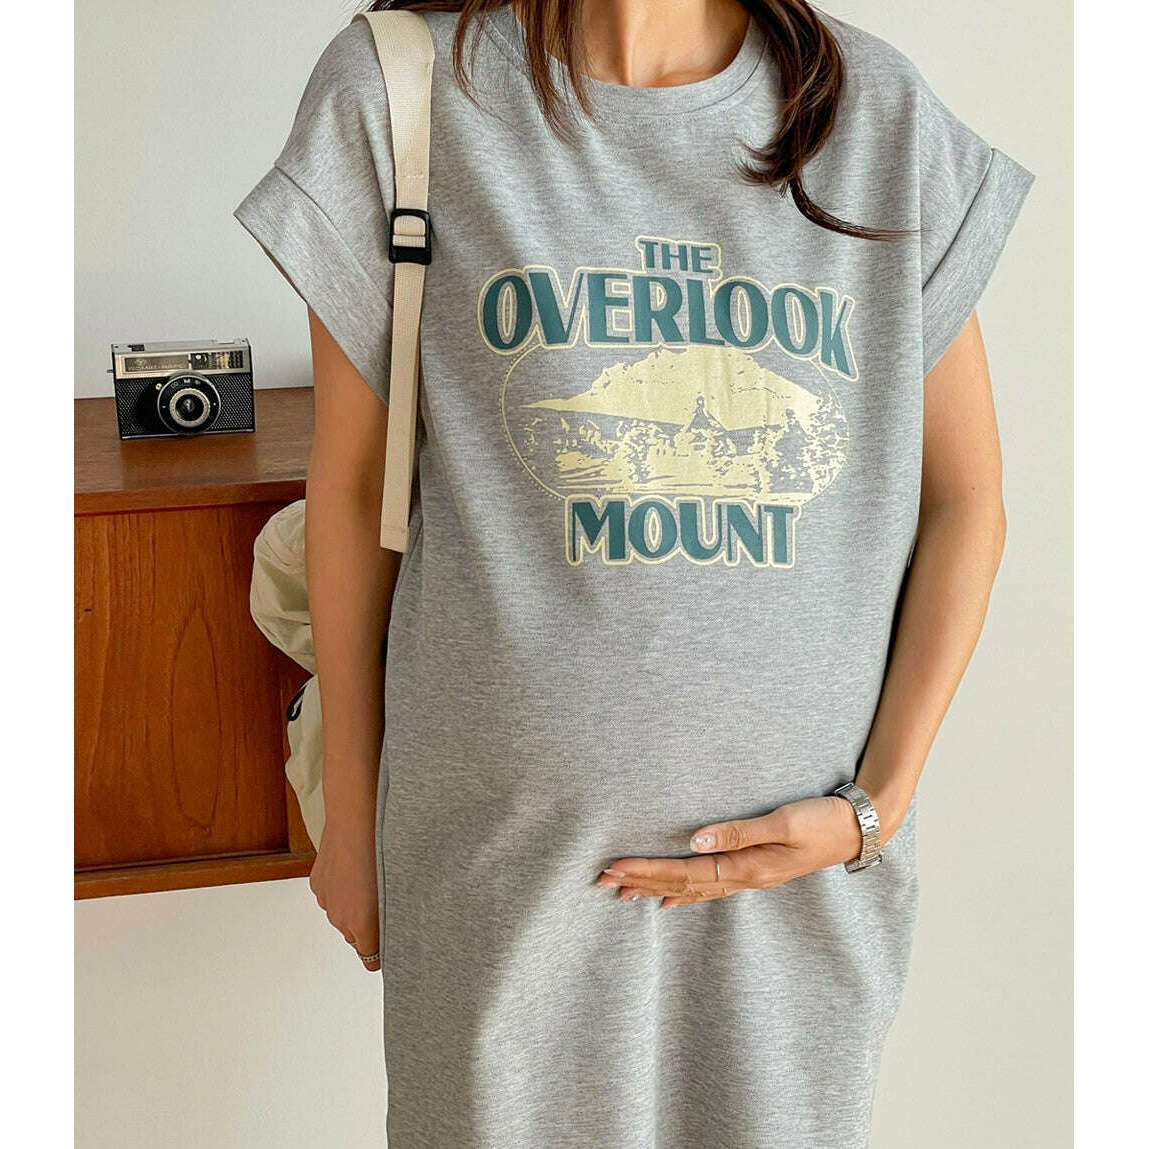 MUMMY.cc:The overlook mount Tee dress